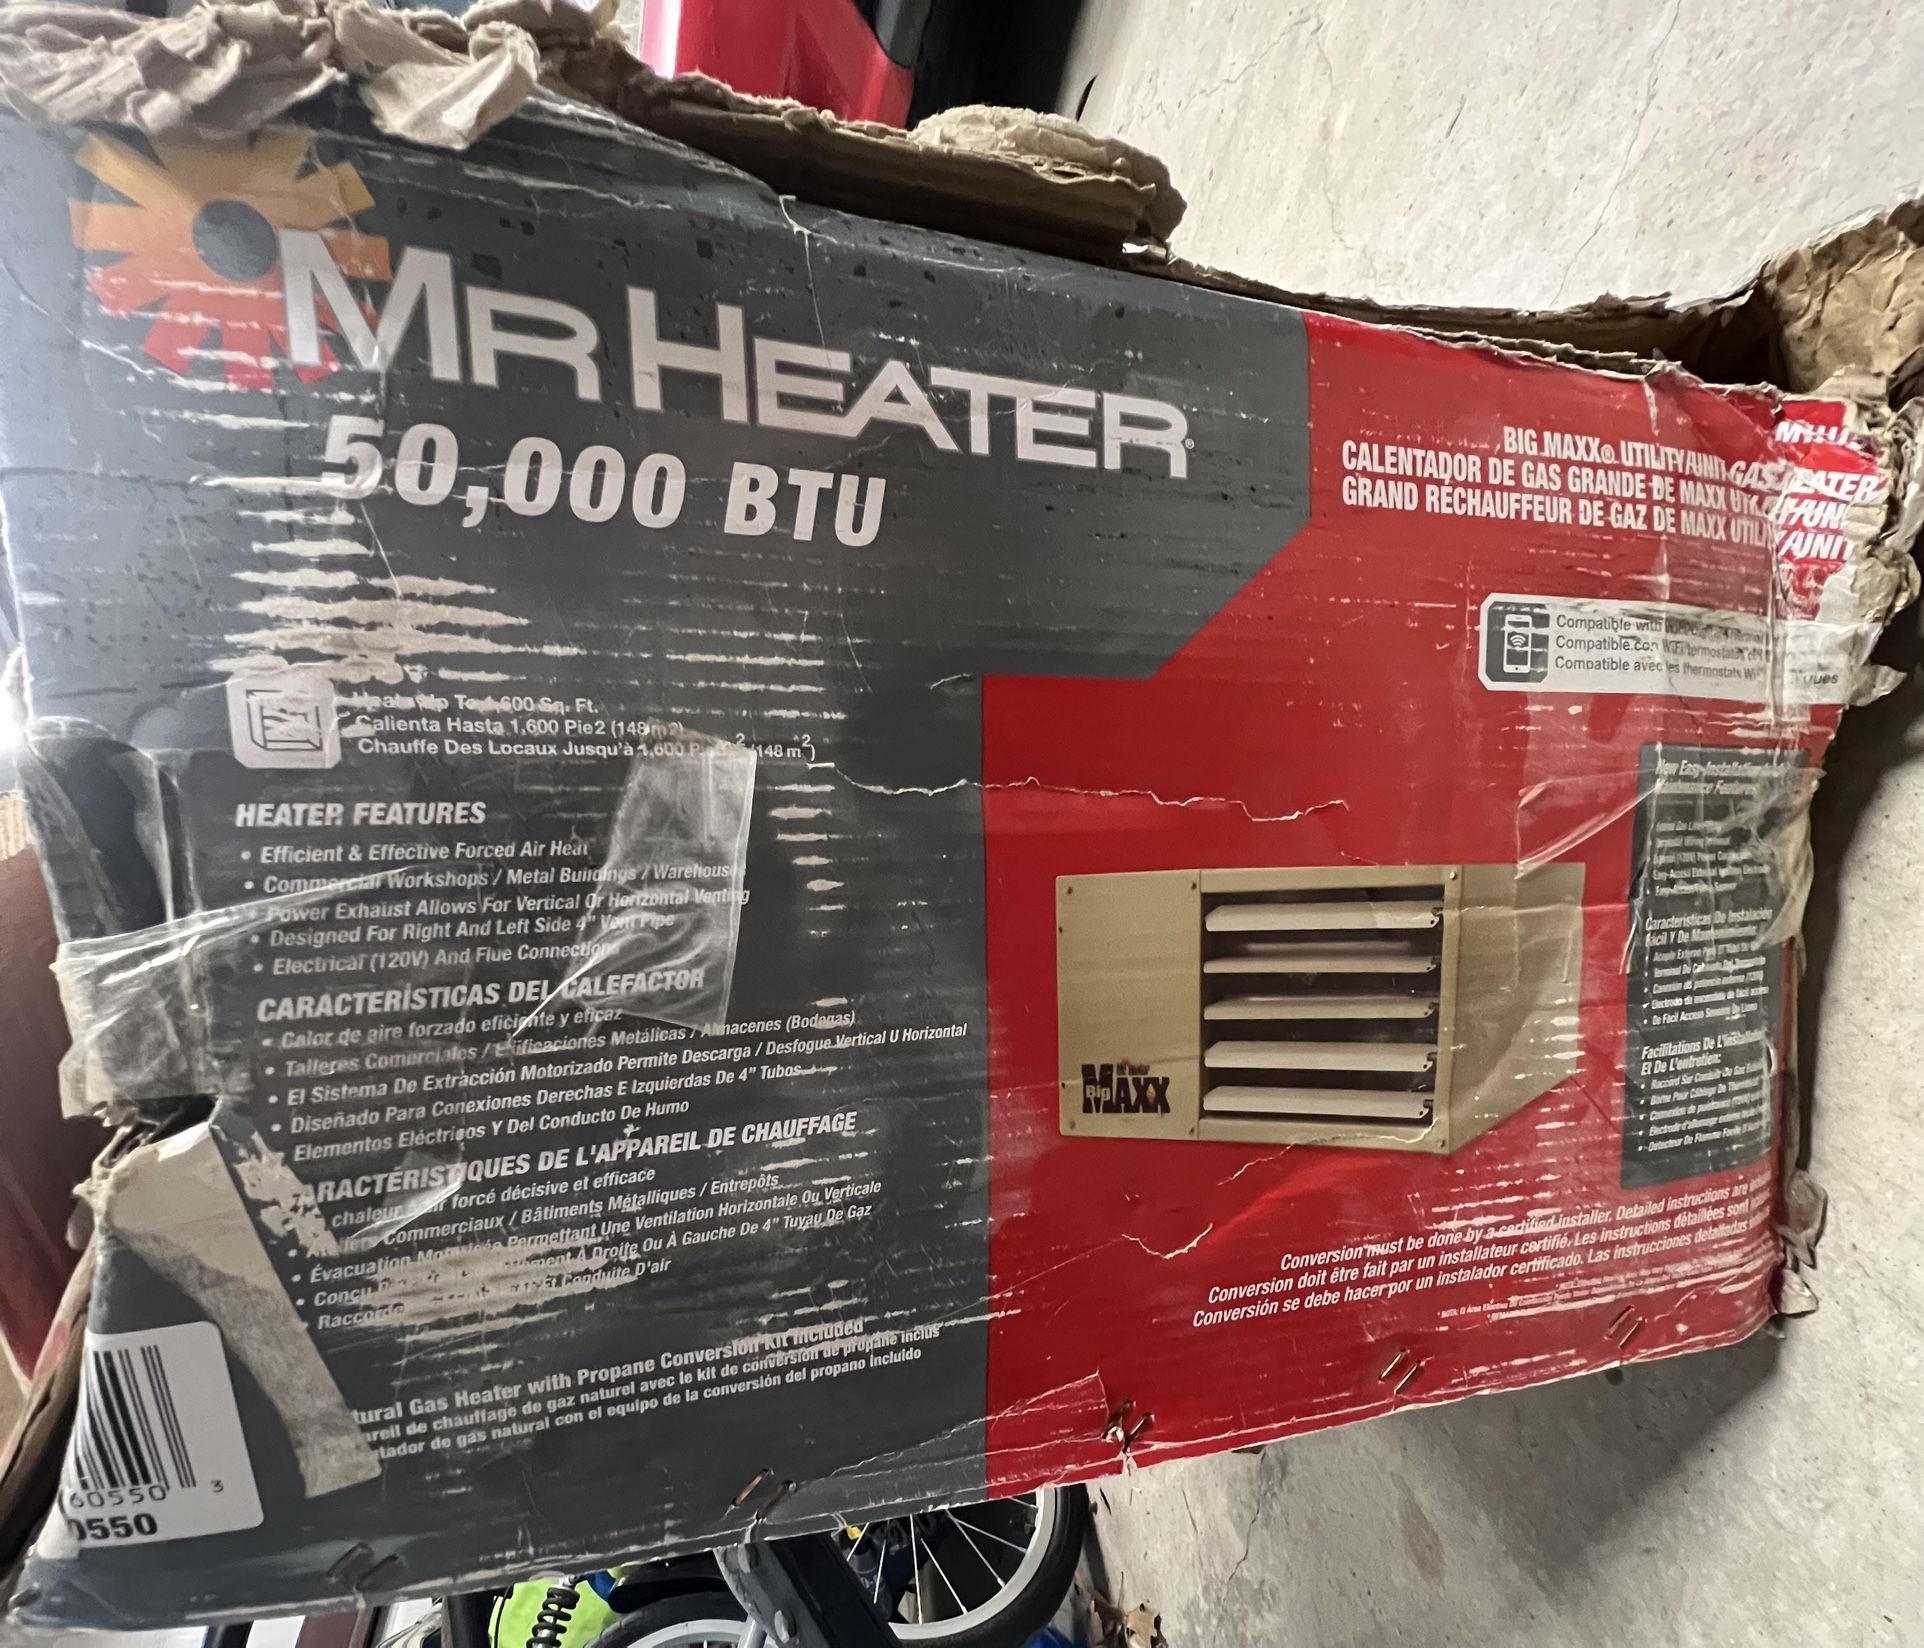 Mr Heater 50,000 BTU - Brand New. 